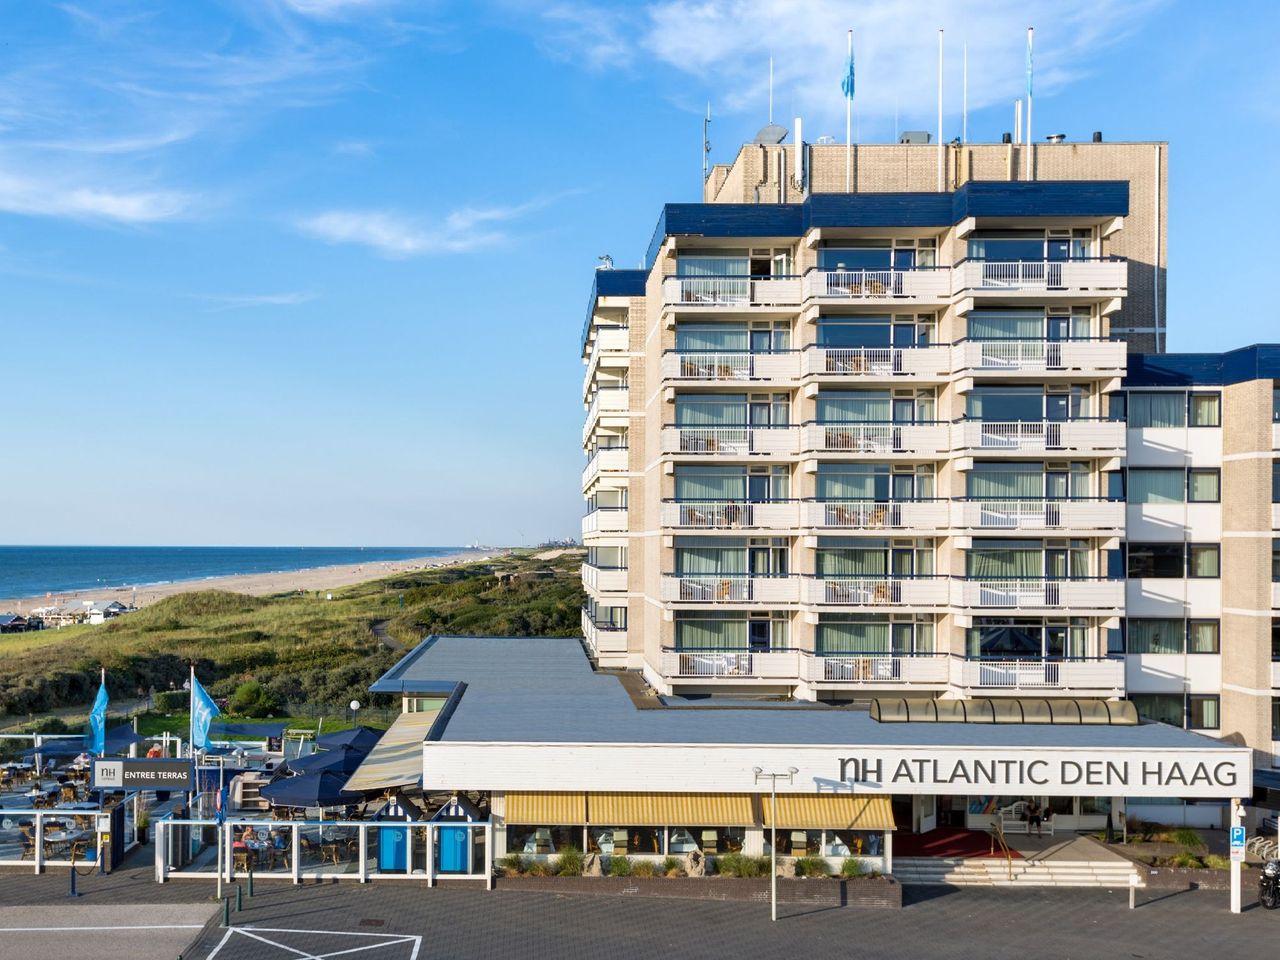 6 Tage im Hotel NH Atlantic Den Haag 